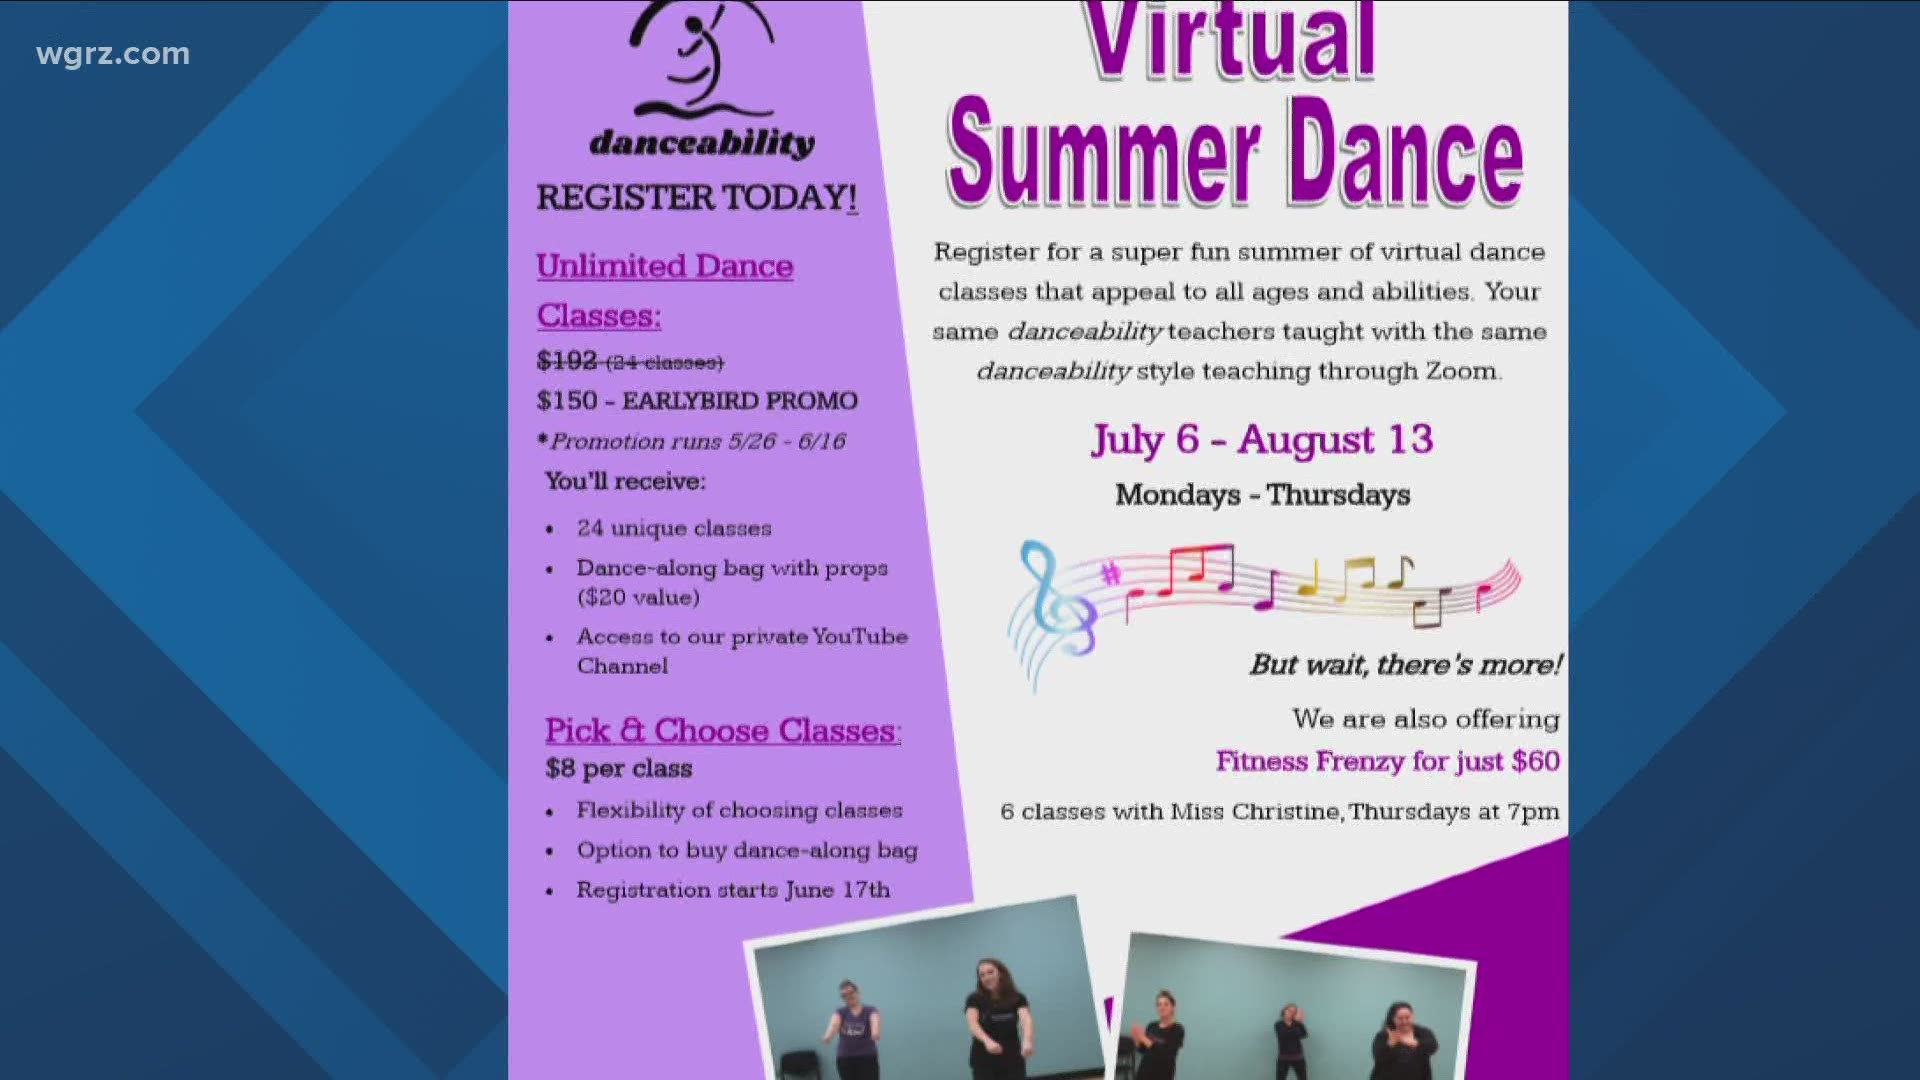 Danceability offers virtual summer classes